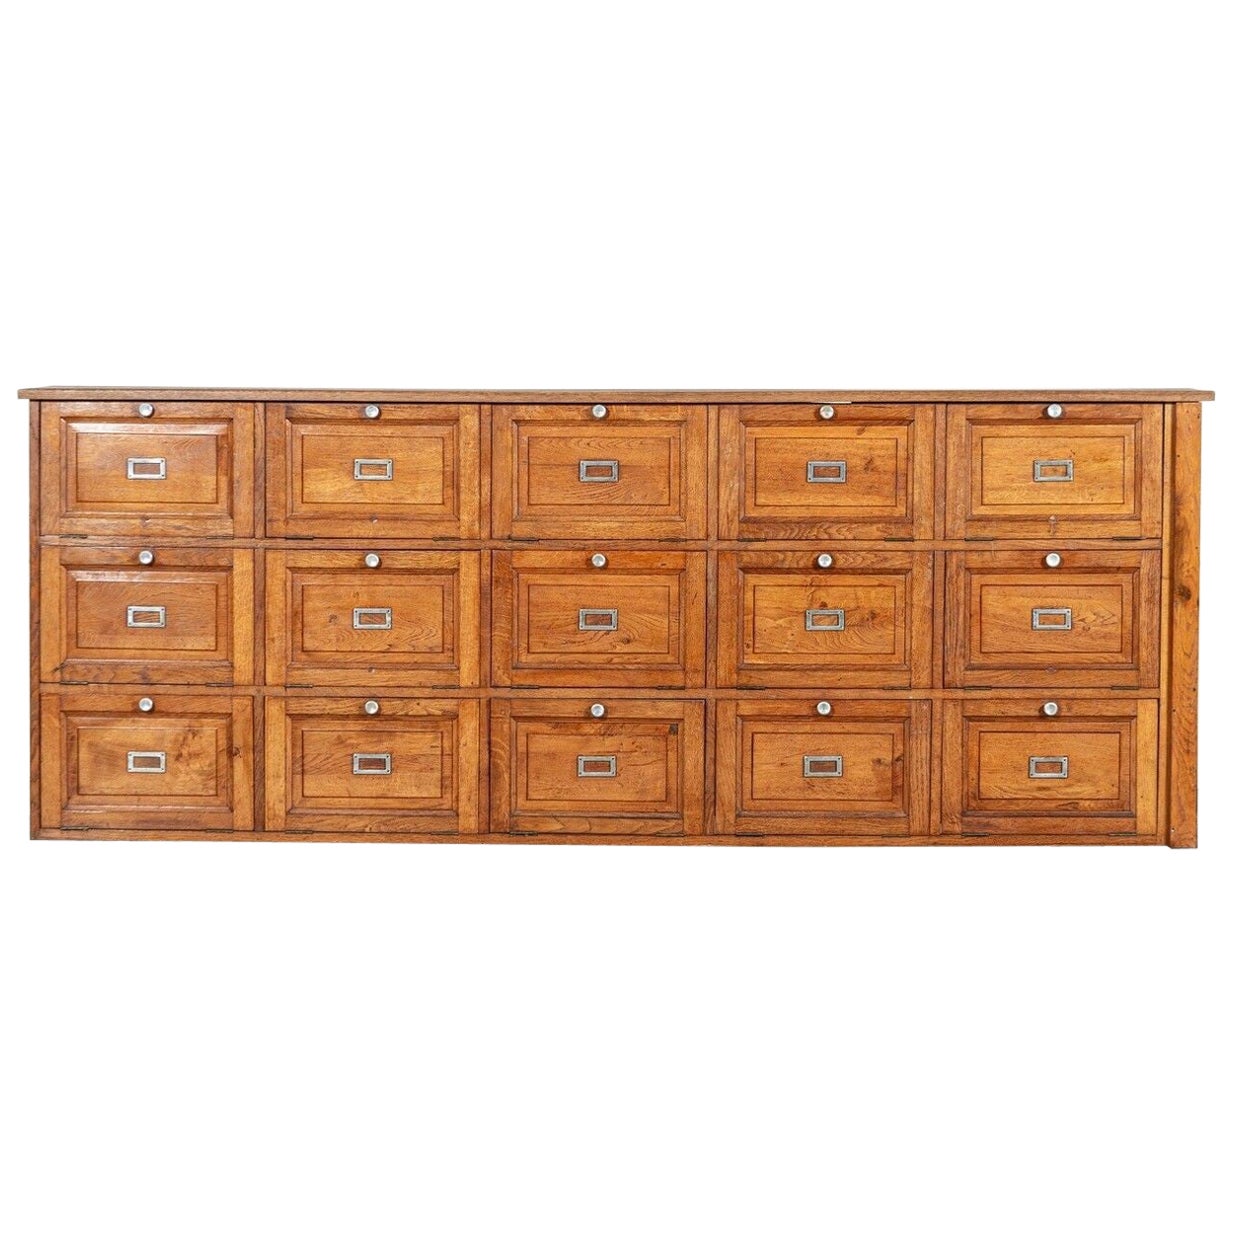 Grands tiroirs / Cabinet / Console Haberdashery en chêne français